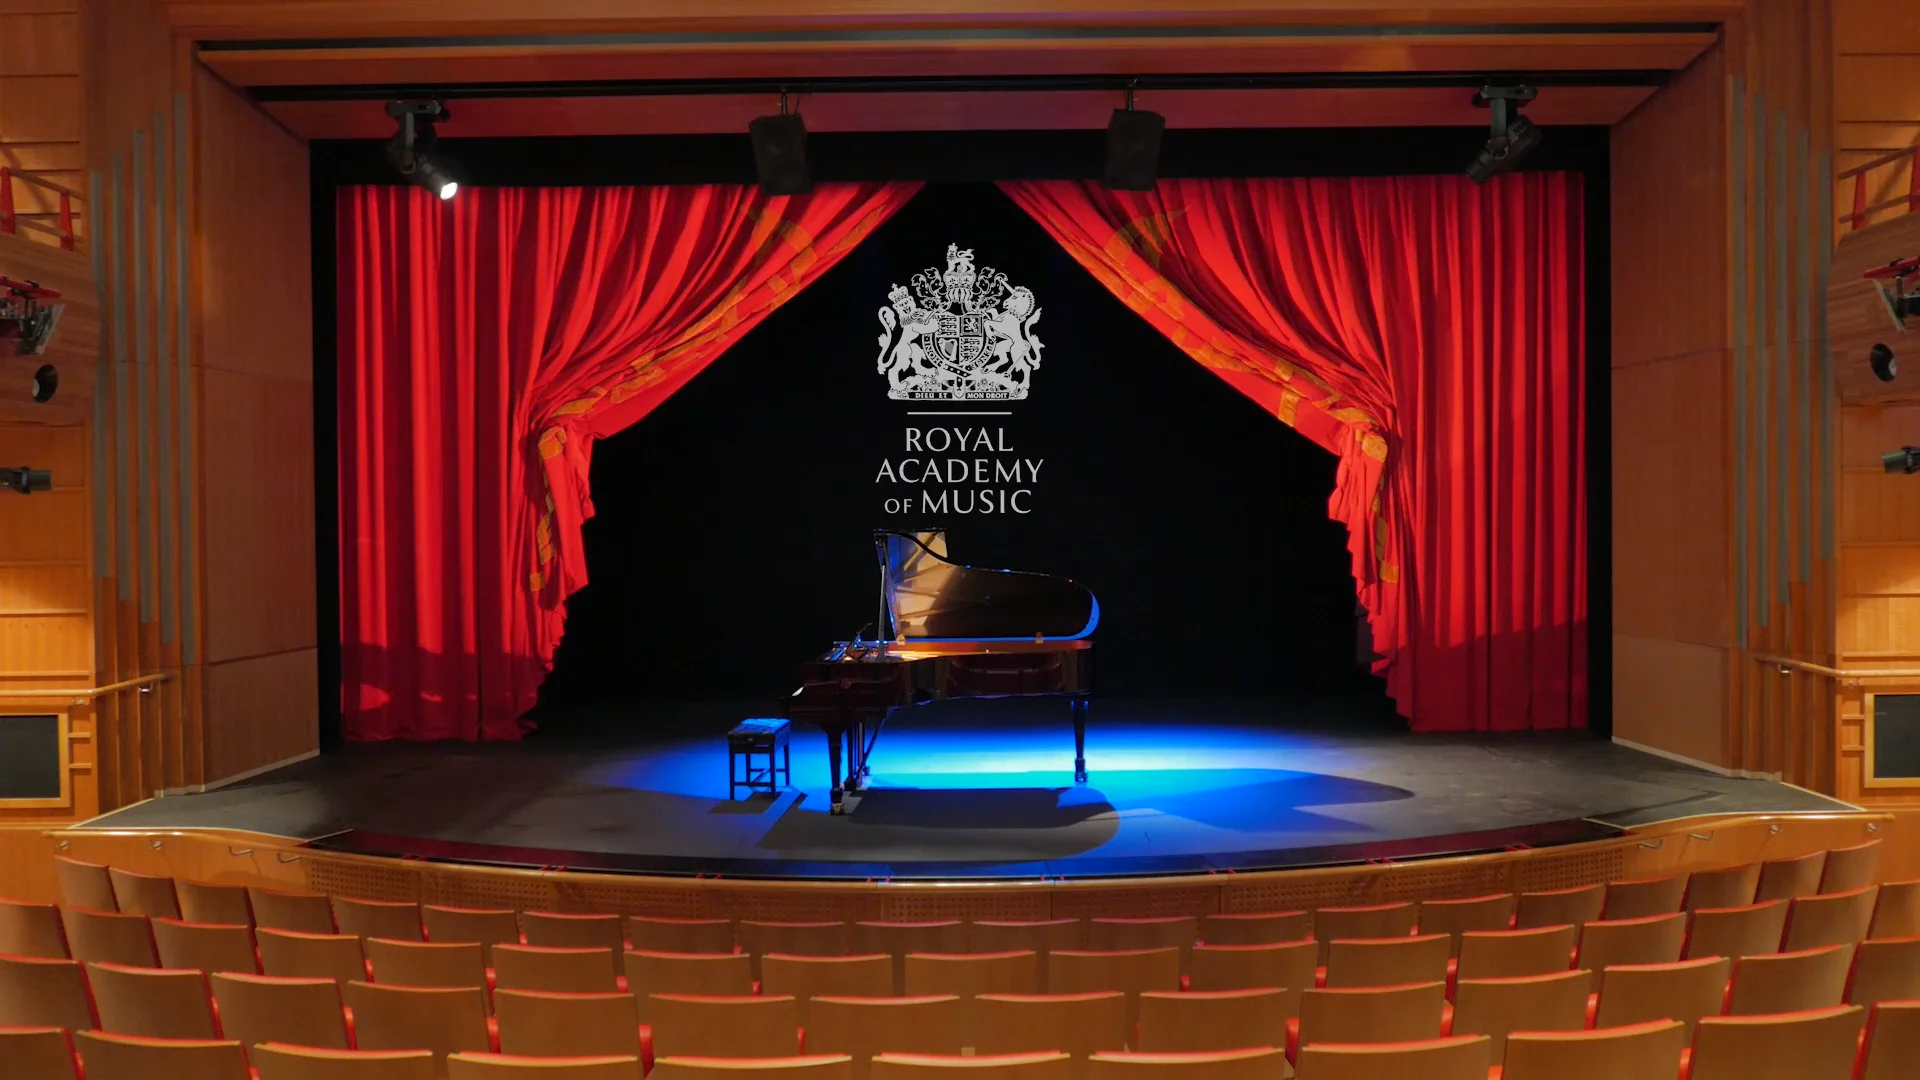 Music Theatre And New Recital Hall On Vimeo